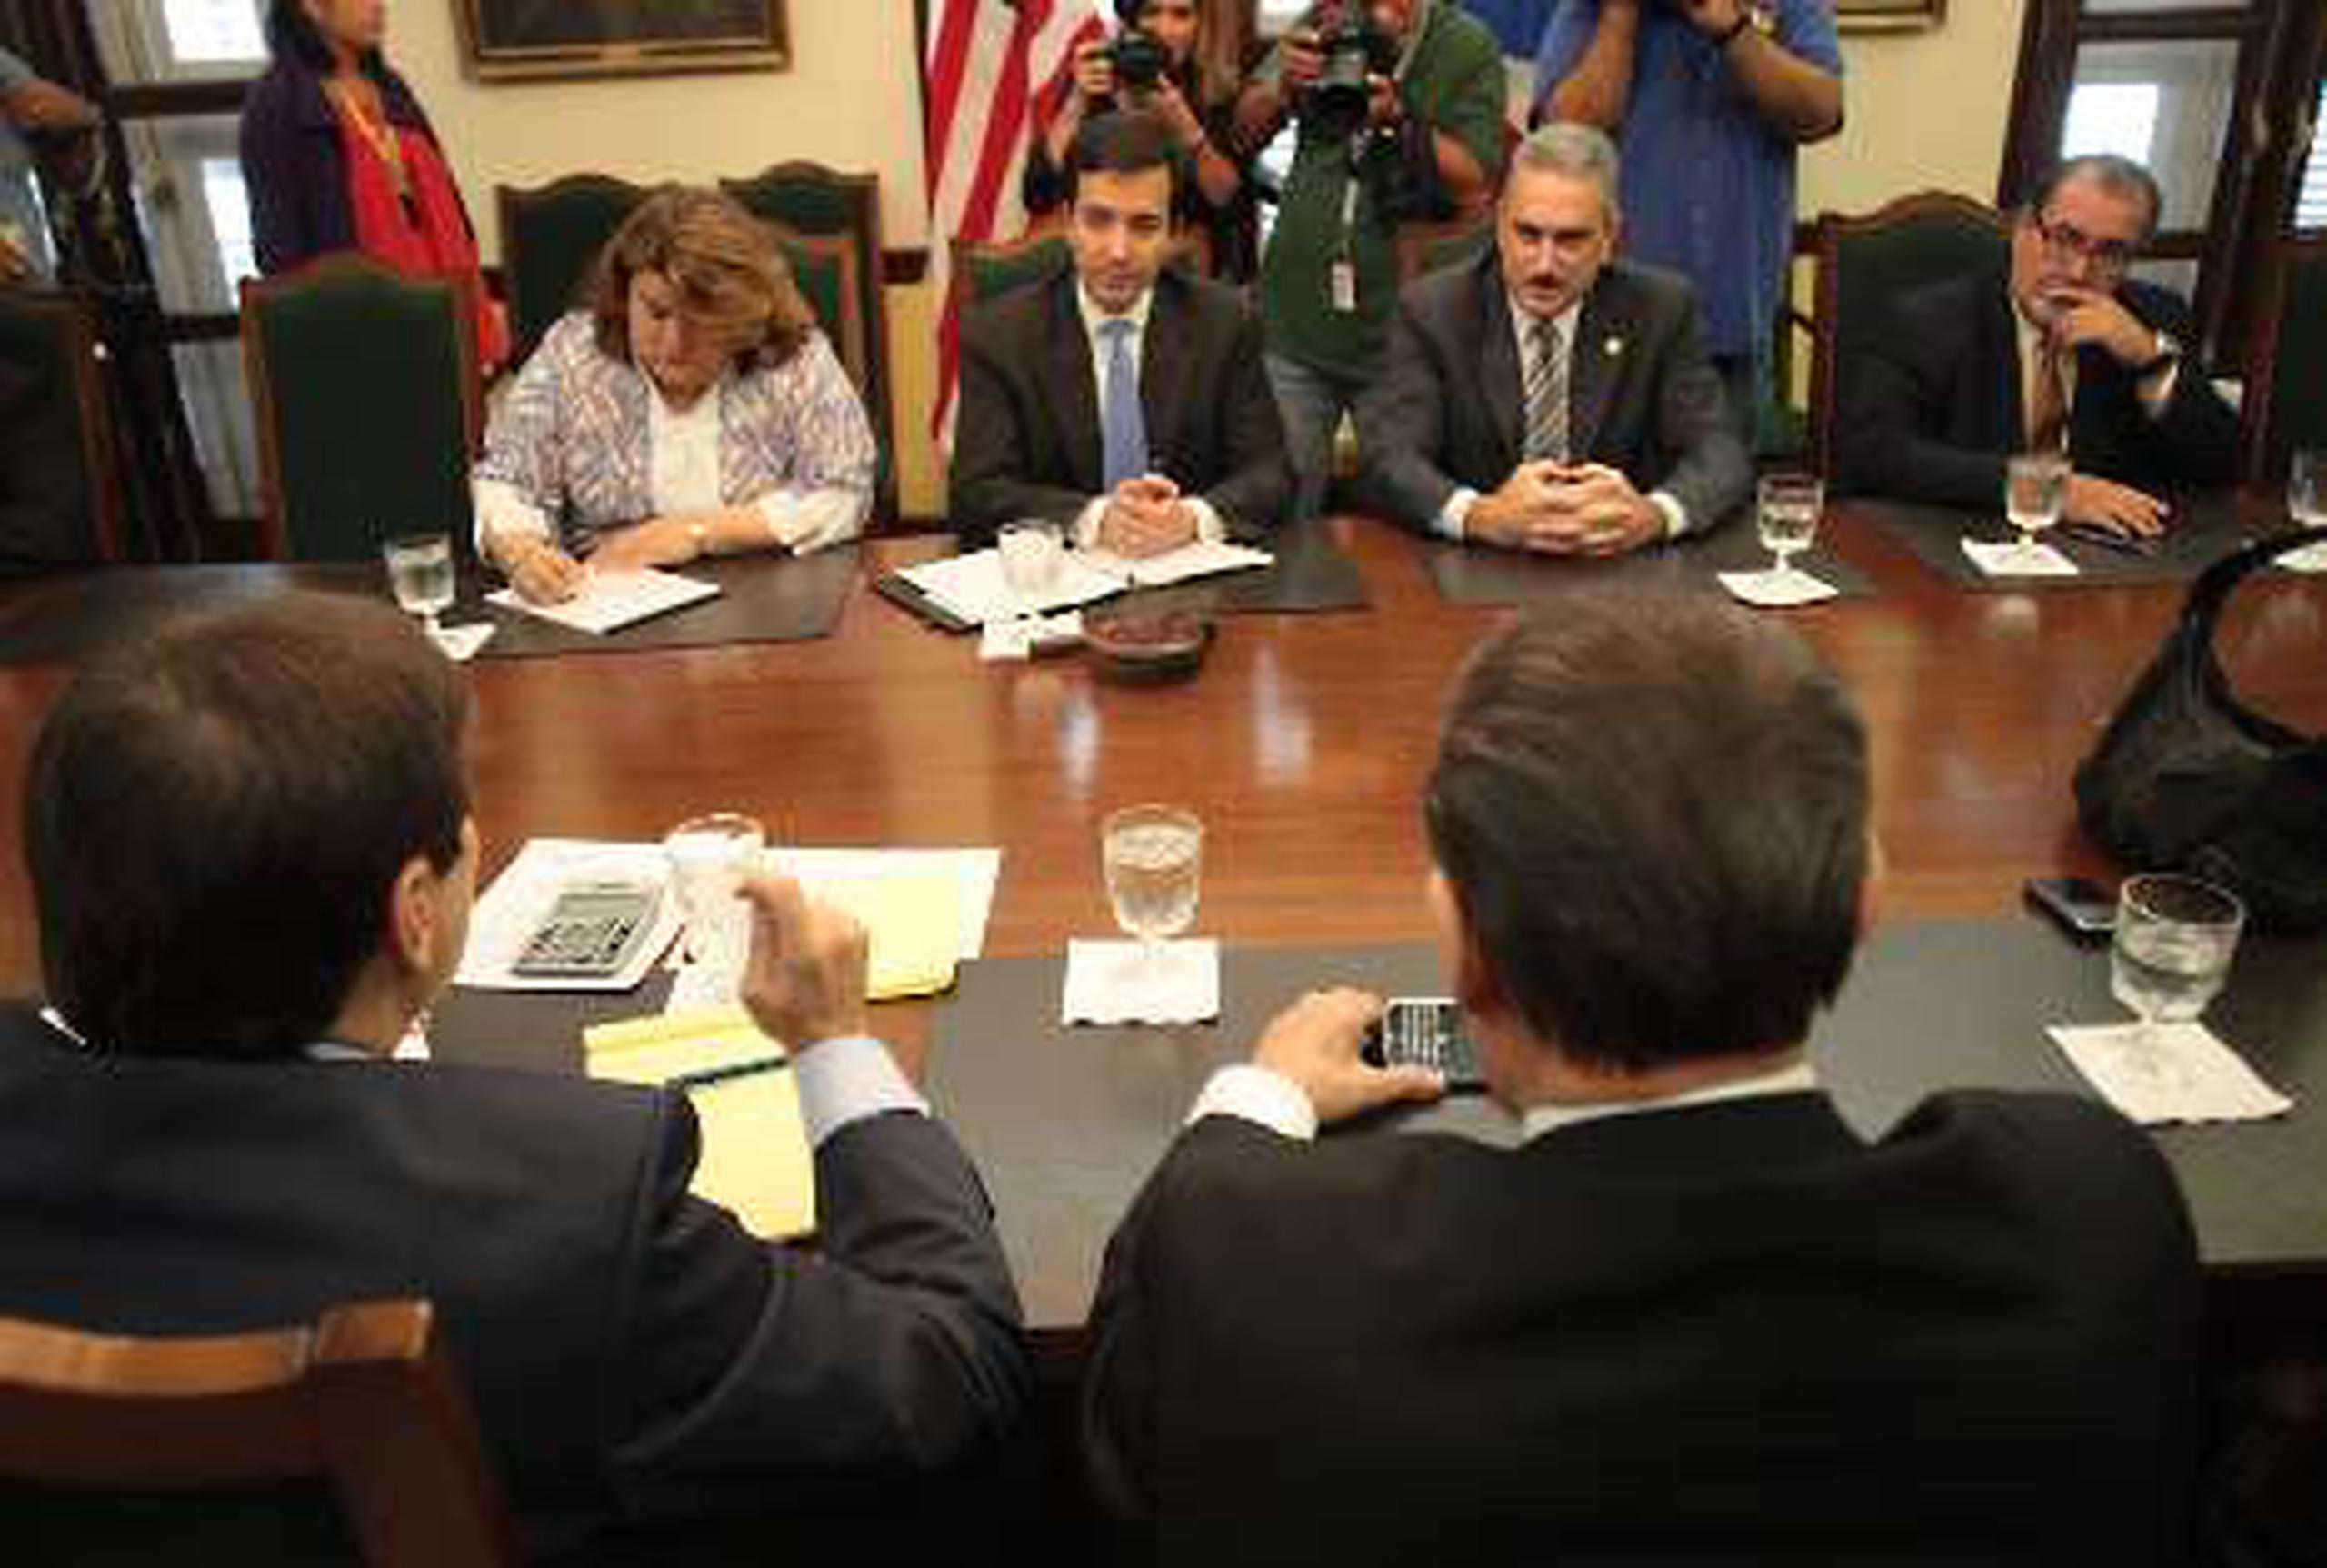  El gobernador Luis Fortuño fue quien convocó a la reunión para buscar alternativas a la crisis fiscal de la UPR.&nbsp;<font color="yellow">(Primera Hora / David Villafañe)</font>